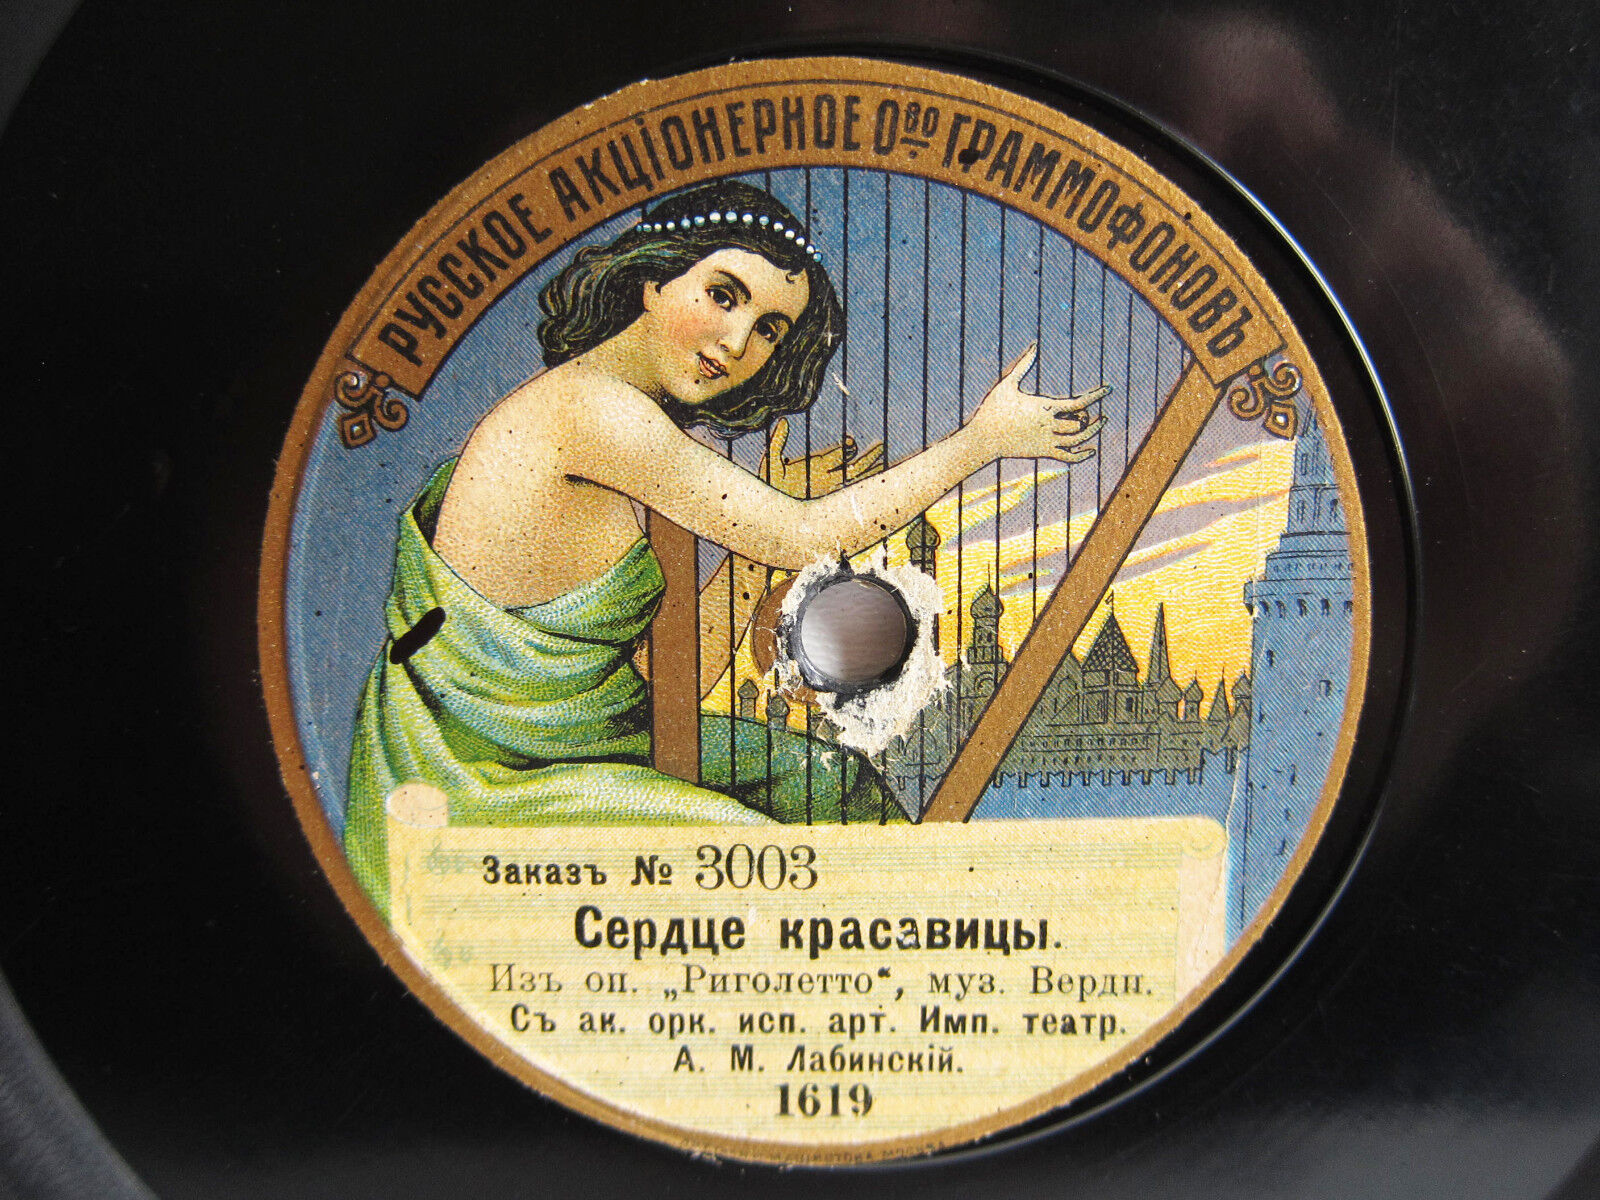 78rpm LABINSKY sings RIGOLETTO - Rare Acoustic Russian RAOG 3003